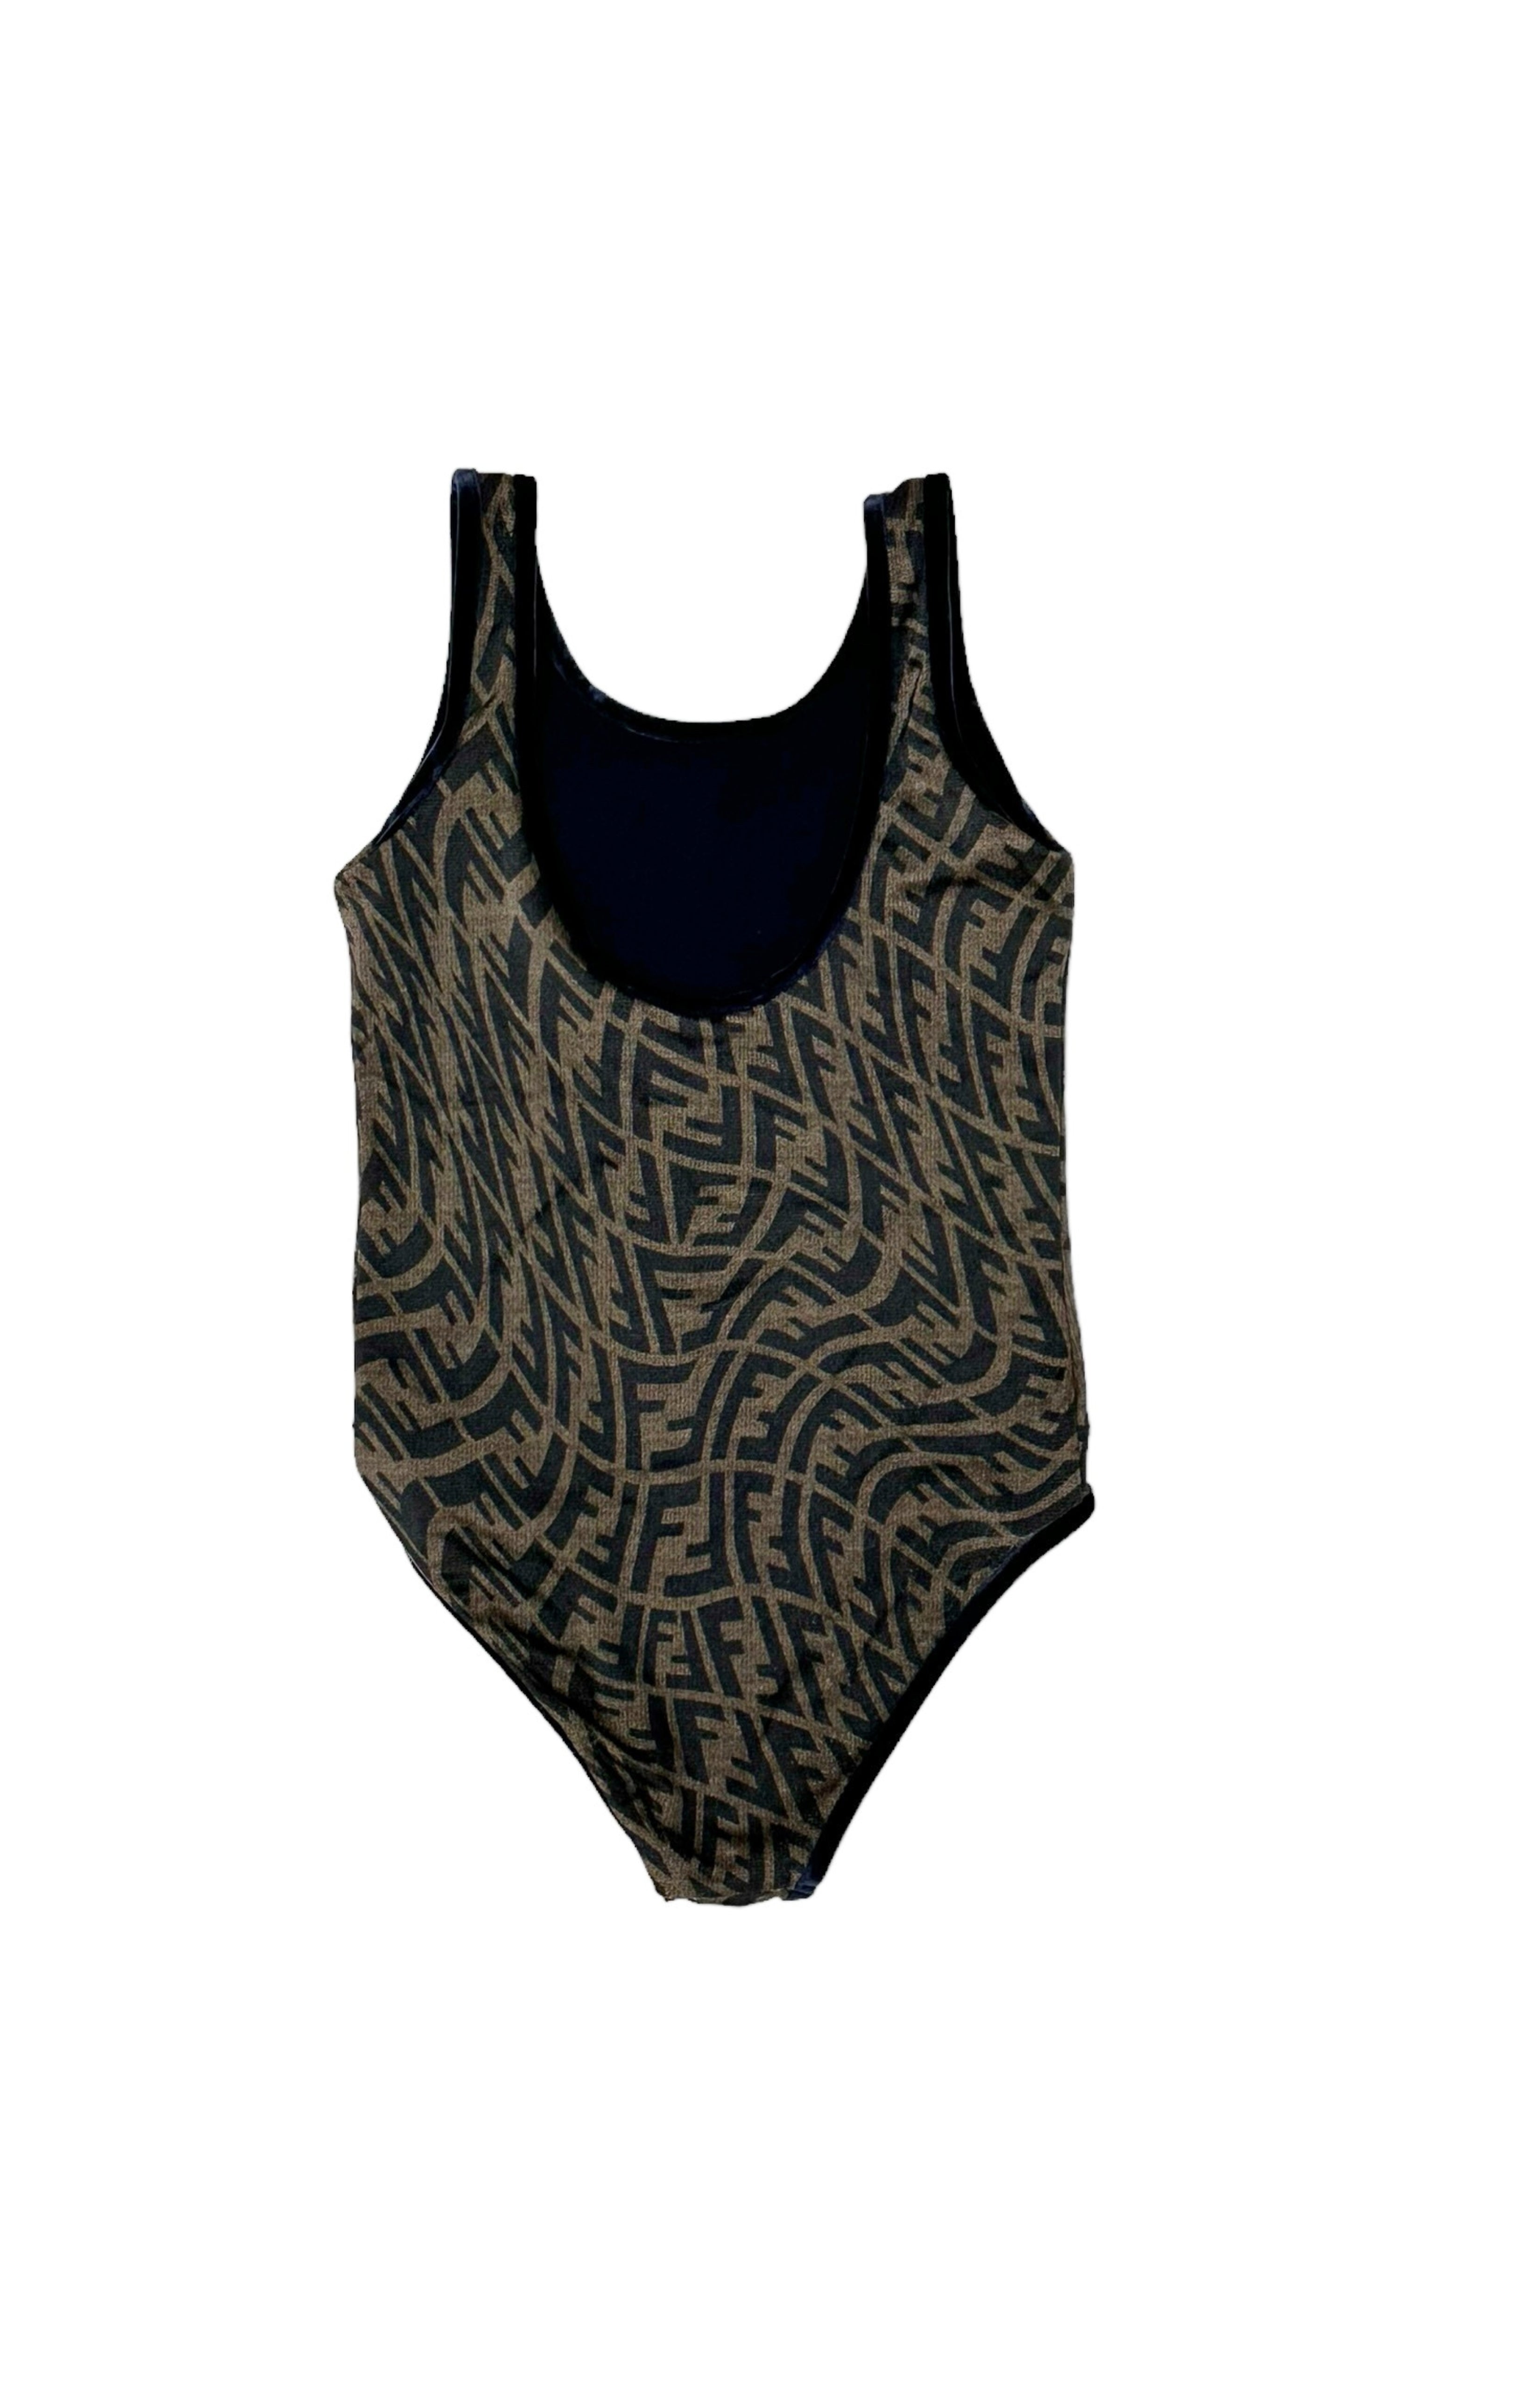 FENDI KIDS (RARE) Swimsuit Size: No size tags, fits like 5-6 Years